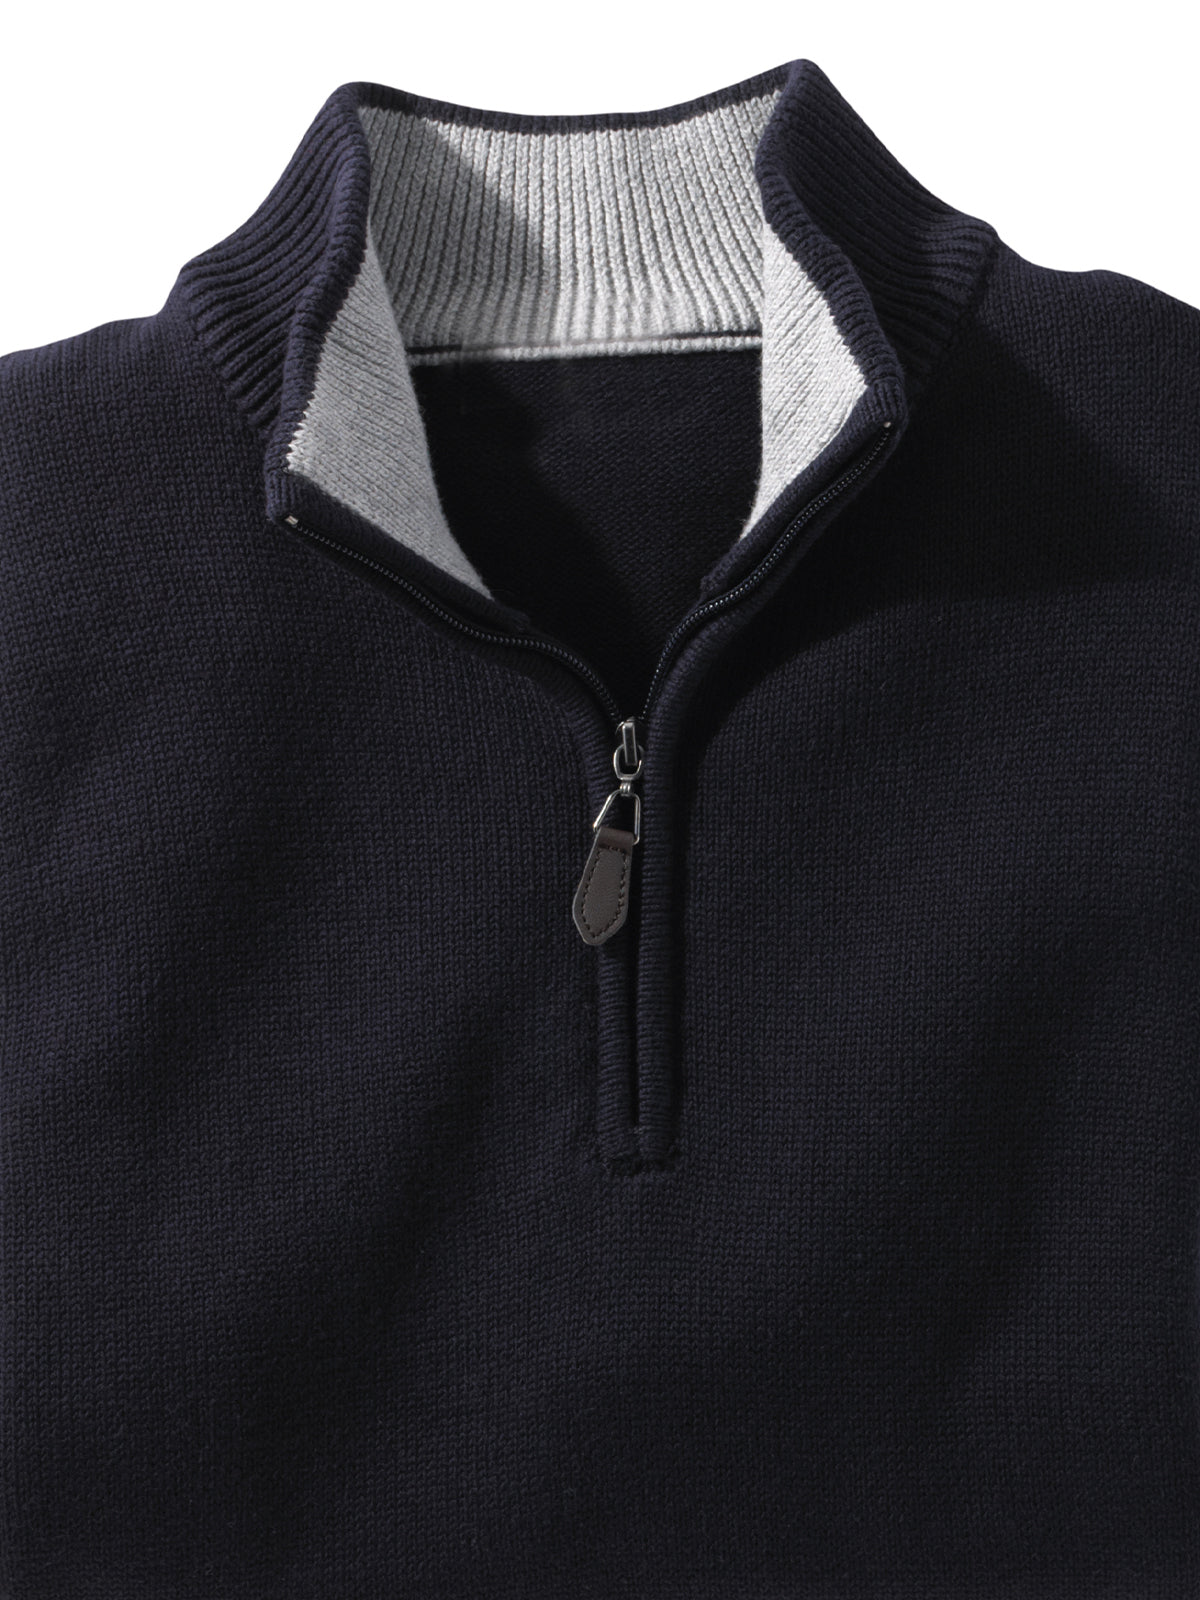 Unisex Jersey Knit Sweater - 712 - Navy